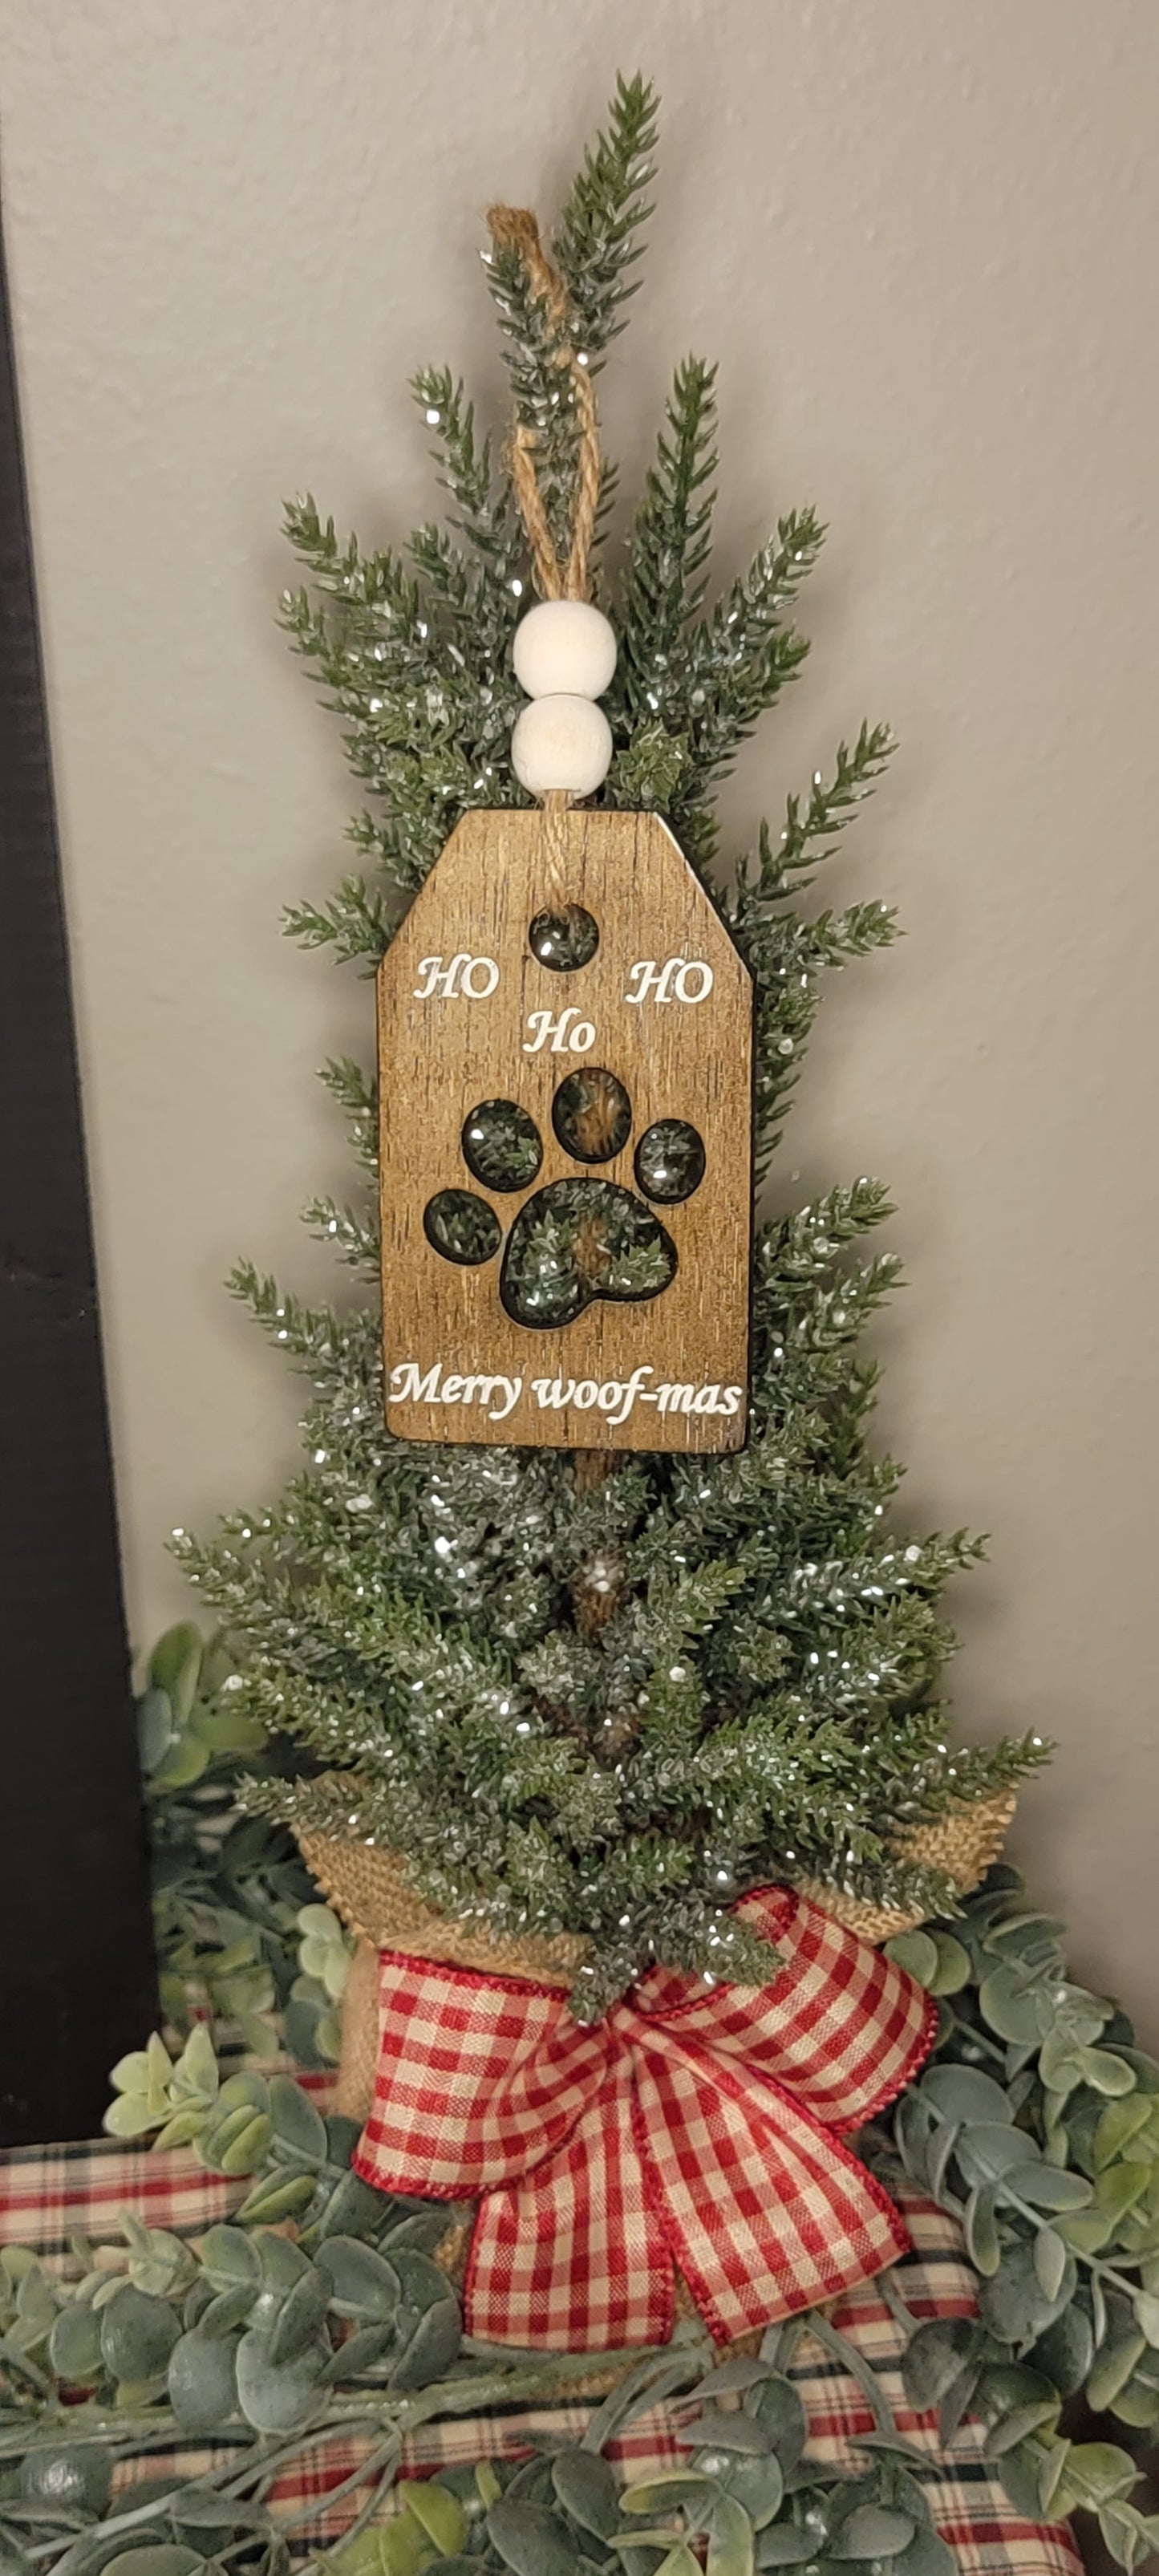 Merry woof-mas Ornament